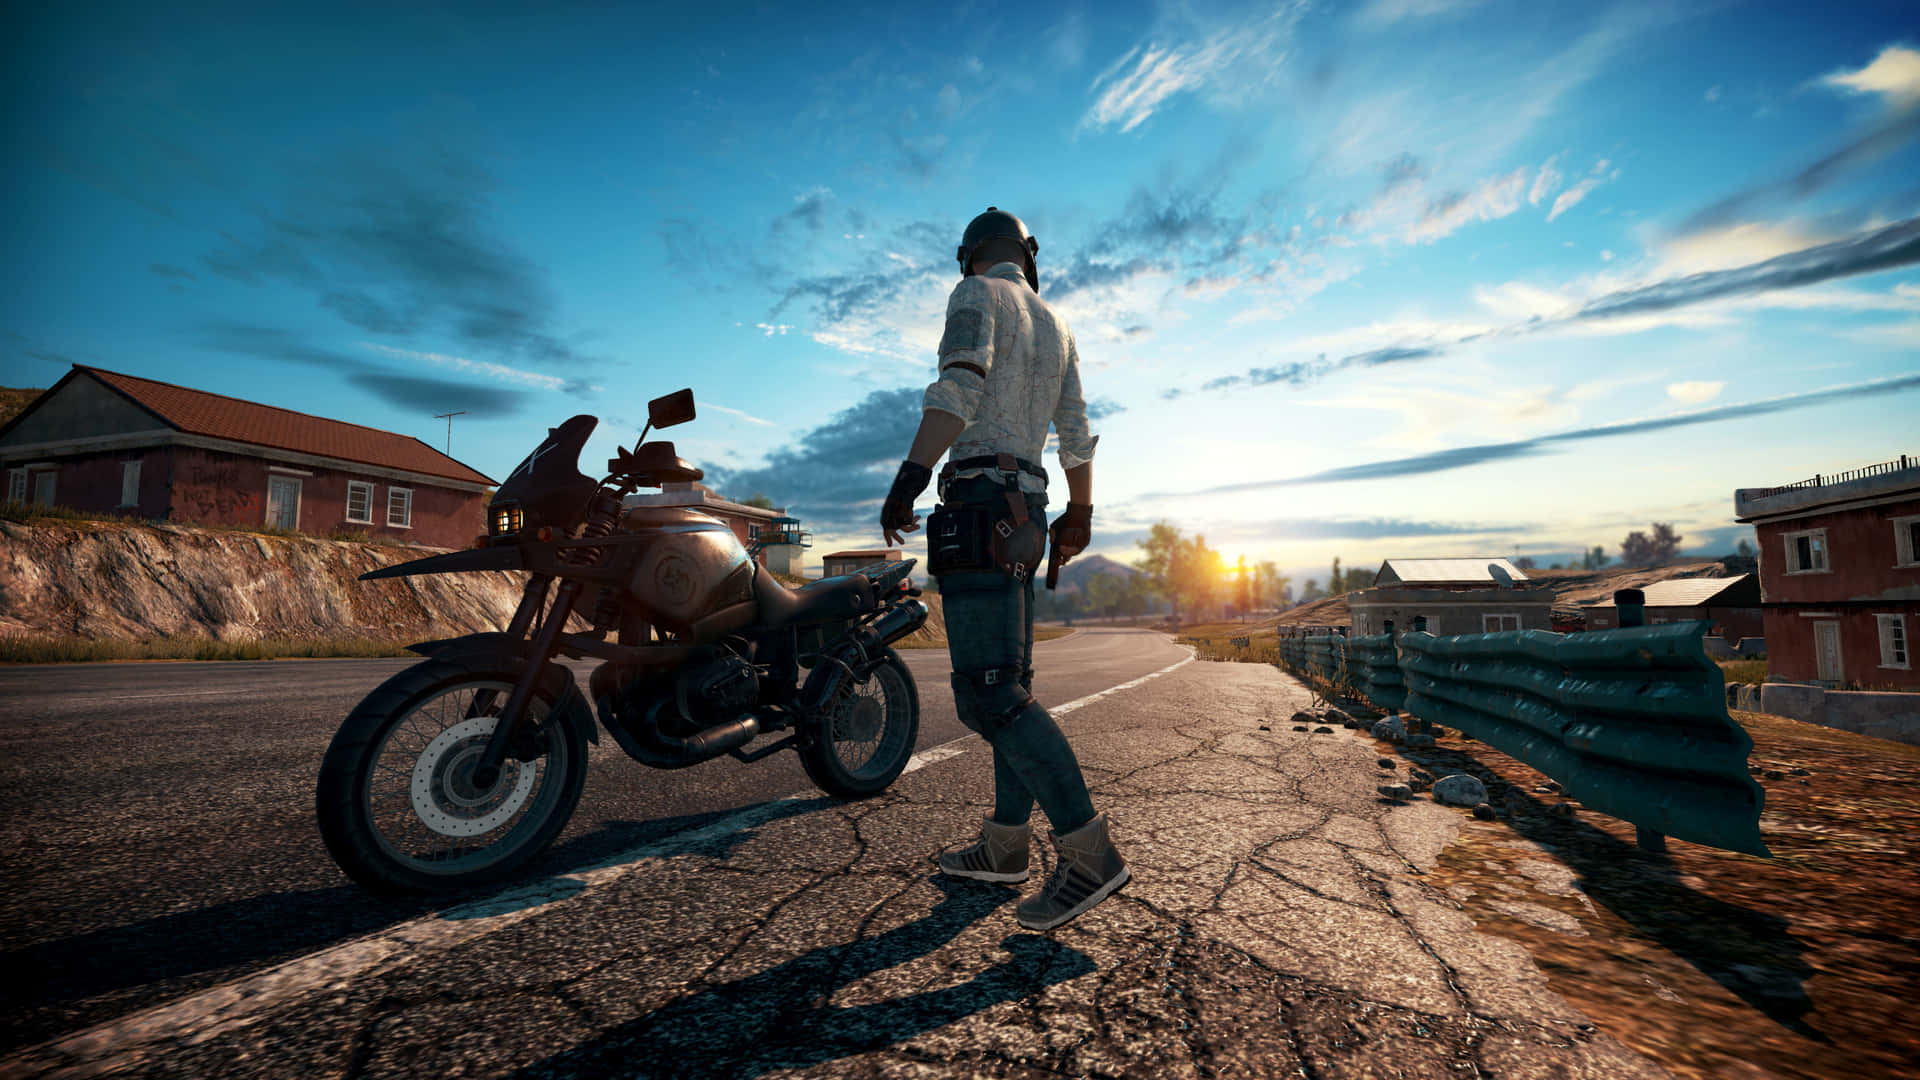 Player Unknown Battlegrounds Helmet Guy Motorcycle Wallpaper